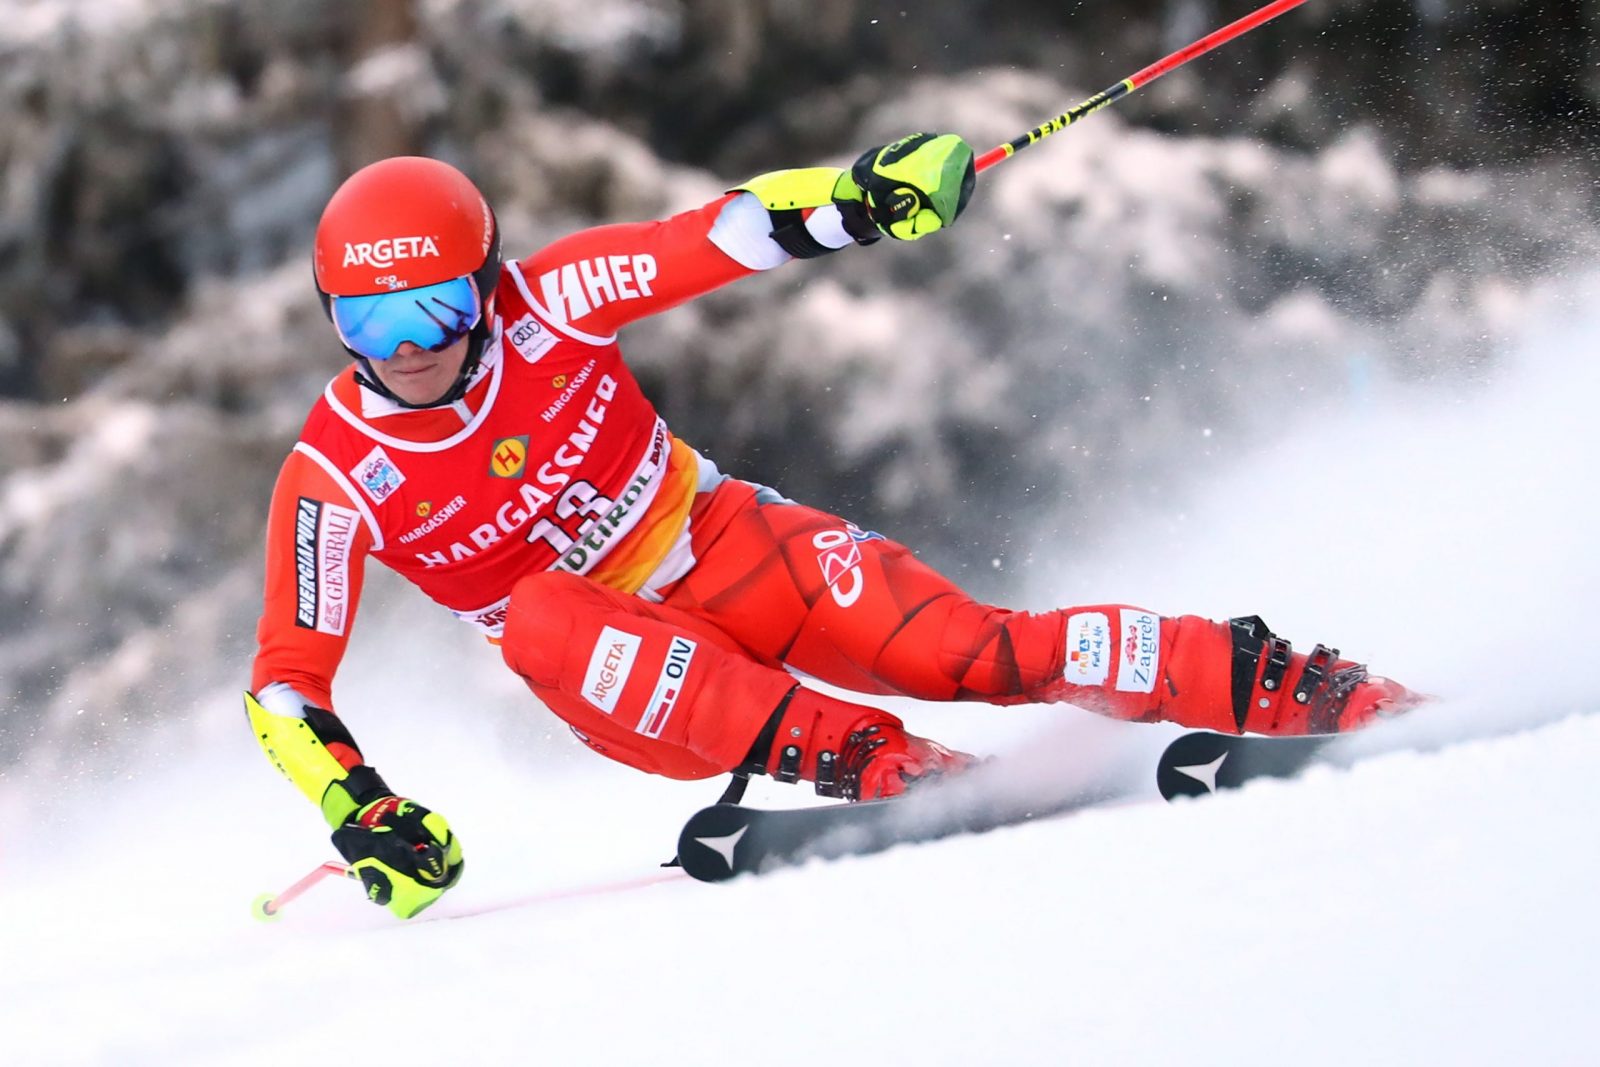 epa10371530 Filip Zubcic of Croatia in action during the Men's Giant Slalom race of the FIS Alpine Skiing World Cup in Alta Badia, Italy, 18 December 2022.  EPA/ANDREA SOLERO